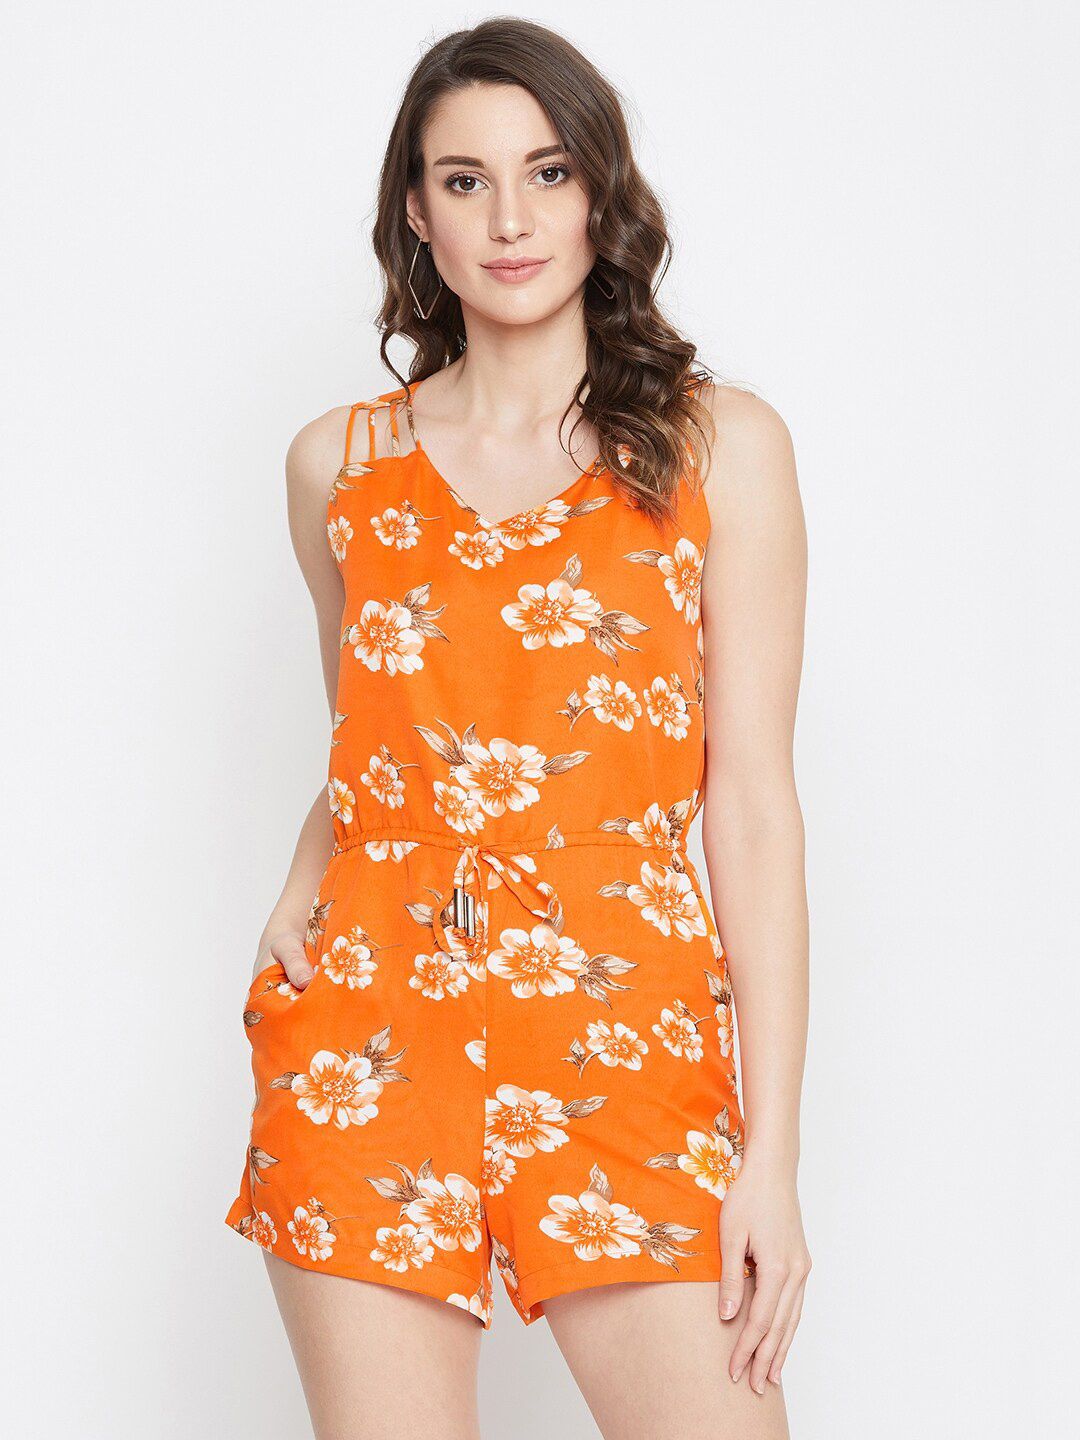 PURYS Orange & Beige Printed Jumpsuit Price in India